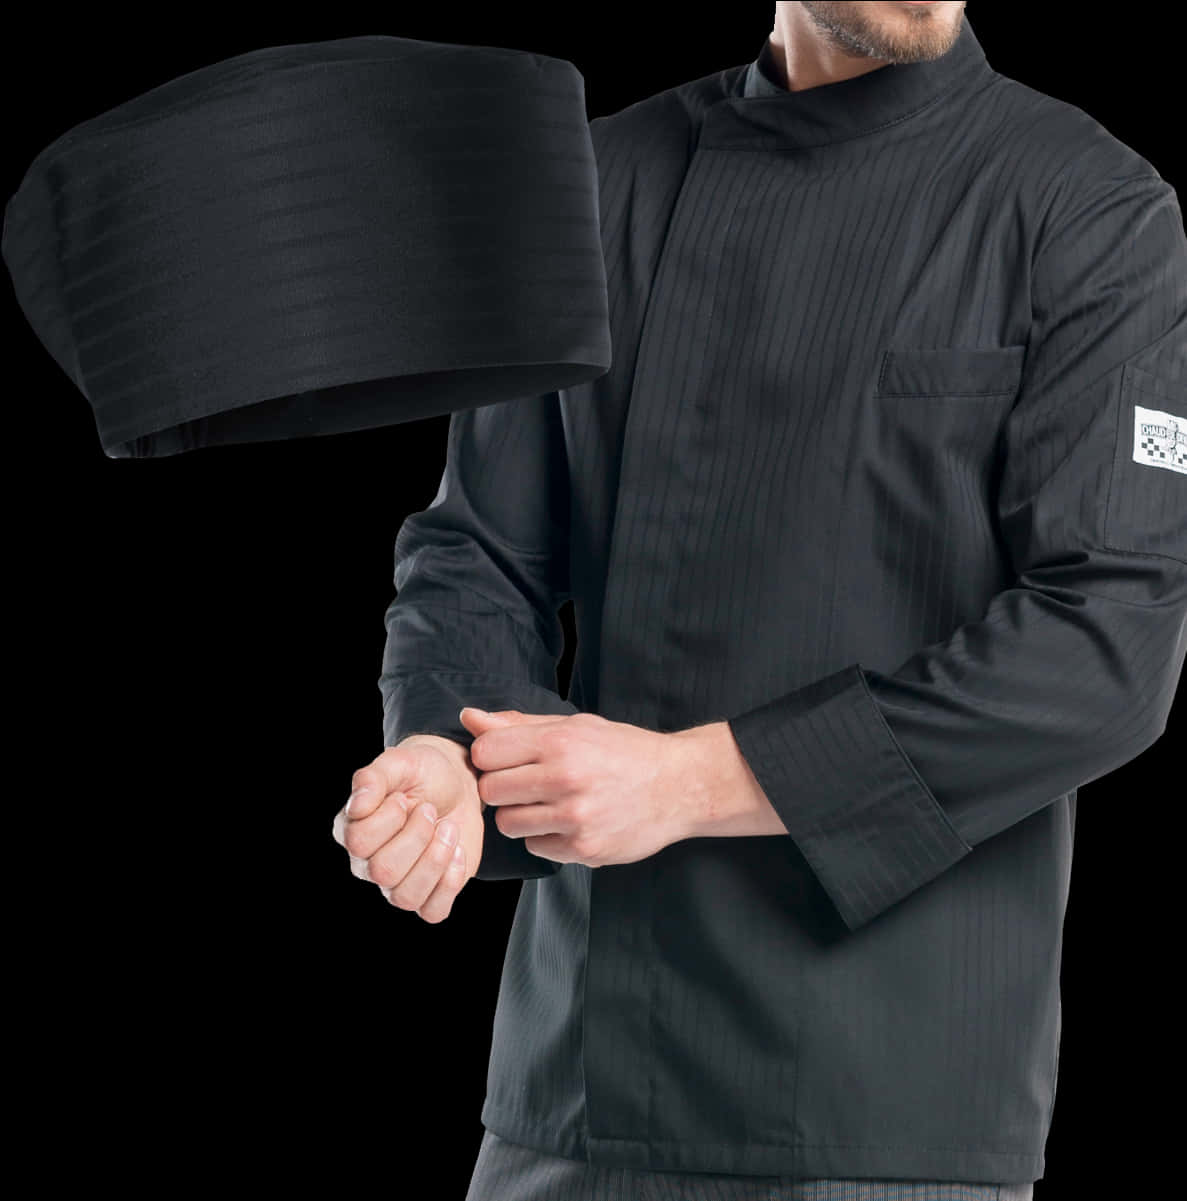 Professional Chefin Black Uniformwith Hat